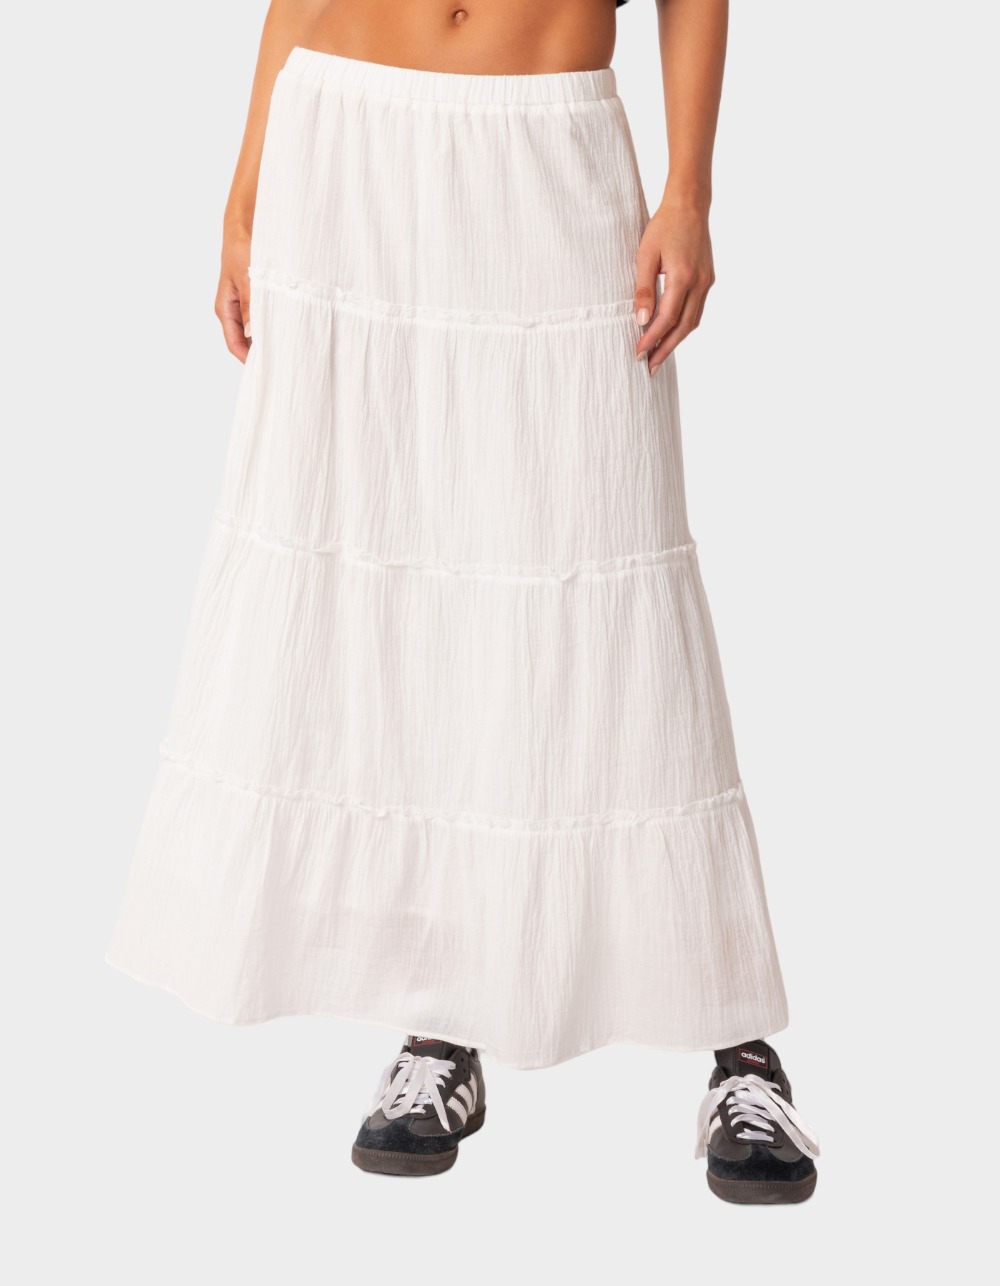 EDIKTED Charlotte Tiered Womens Maxi Skirt